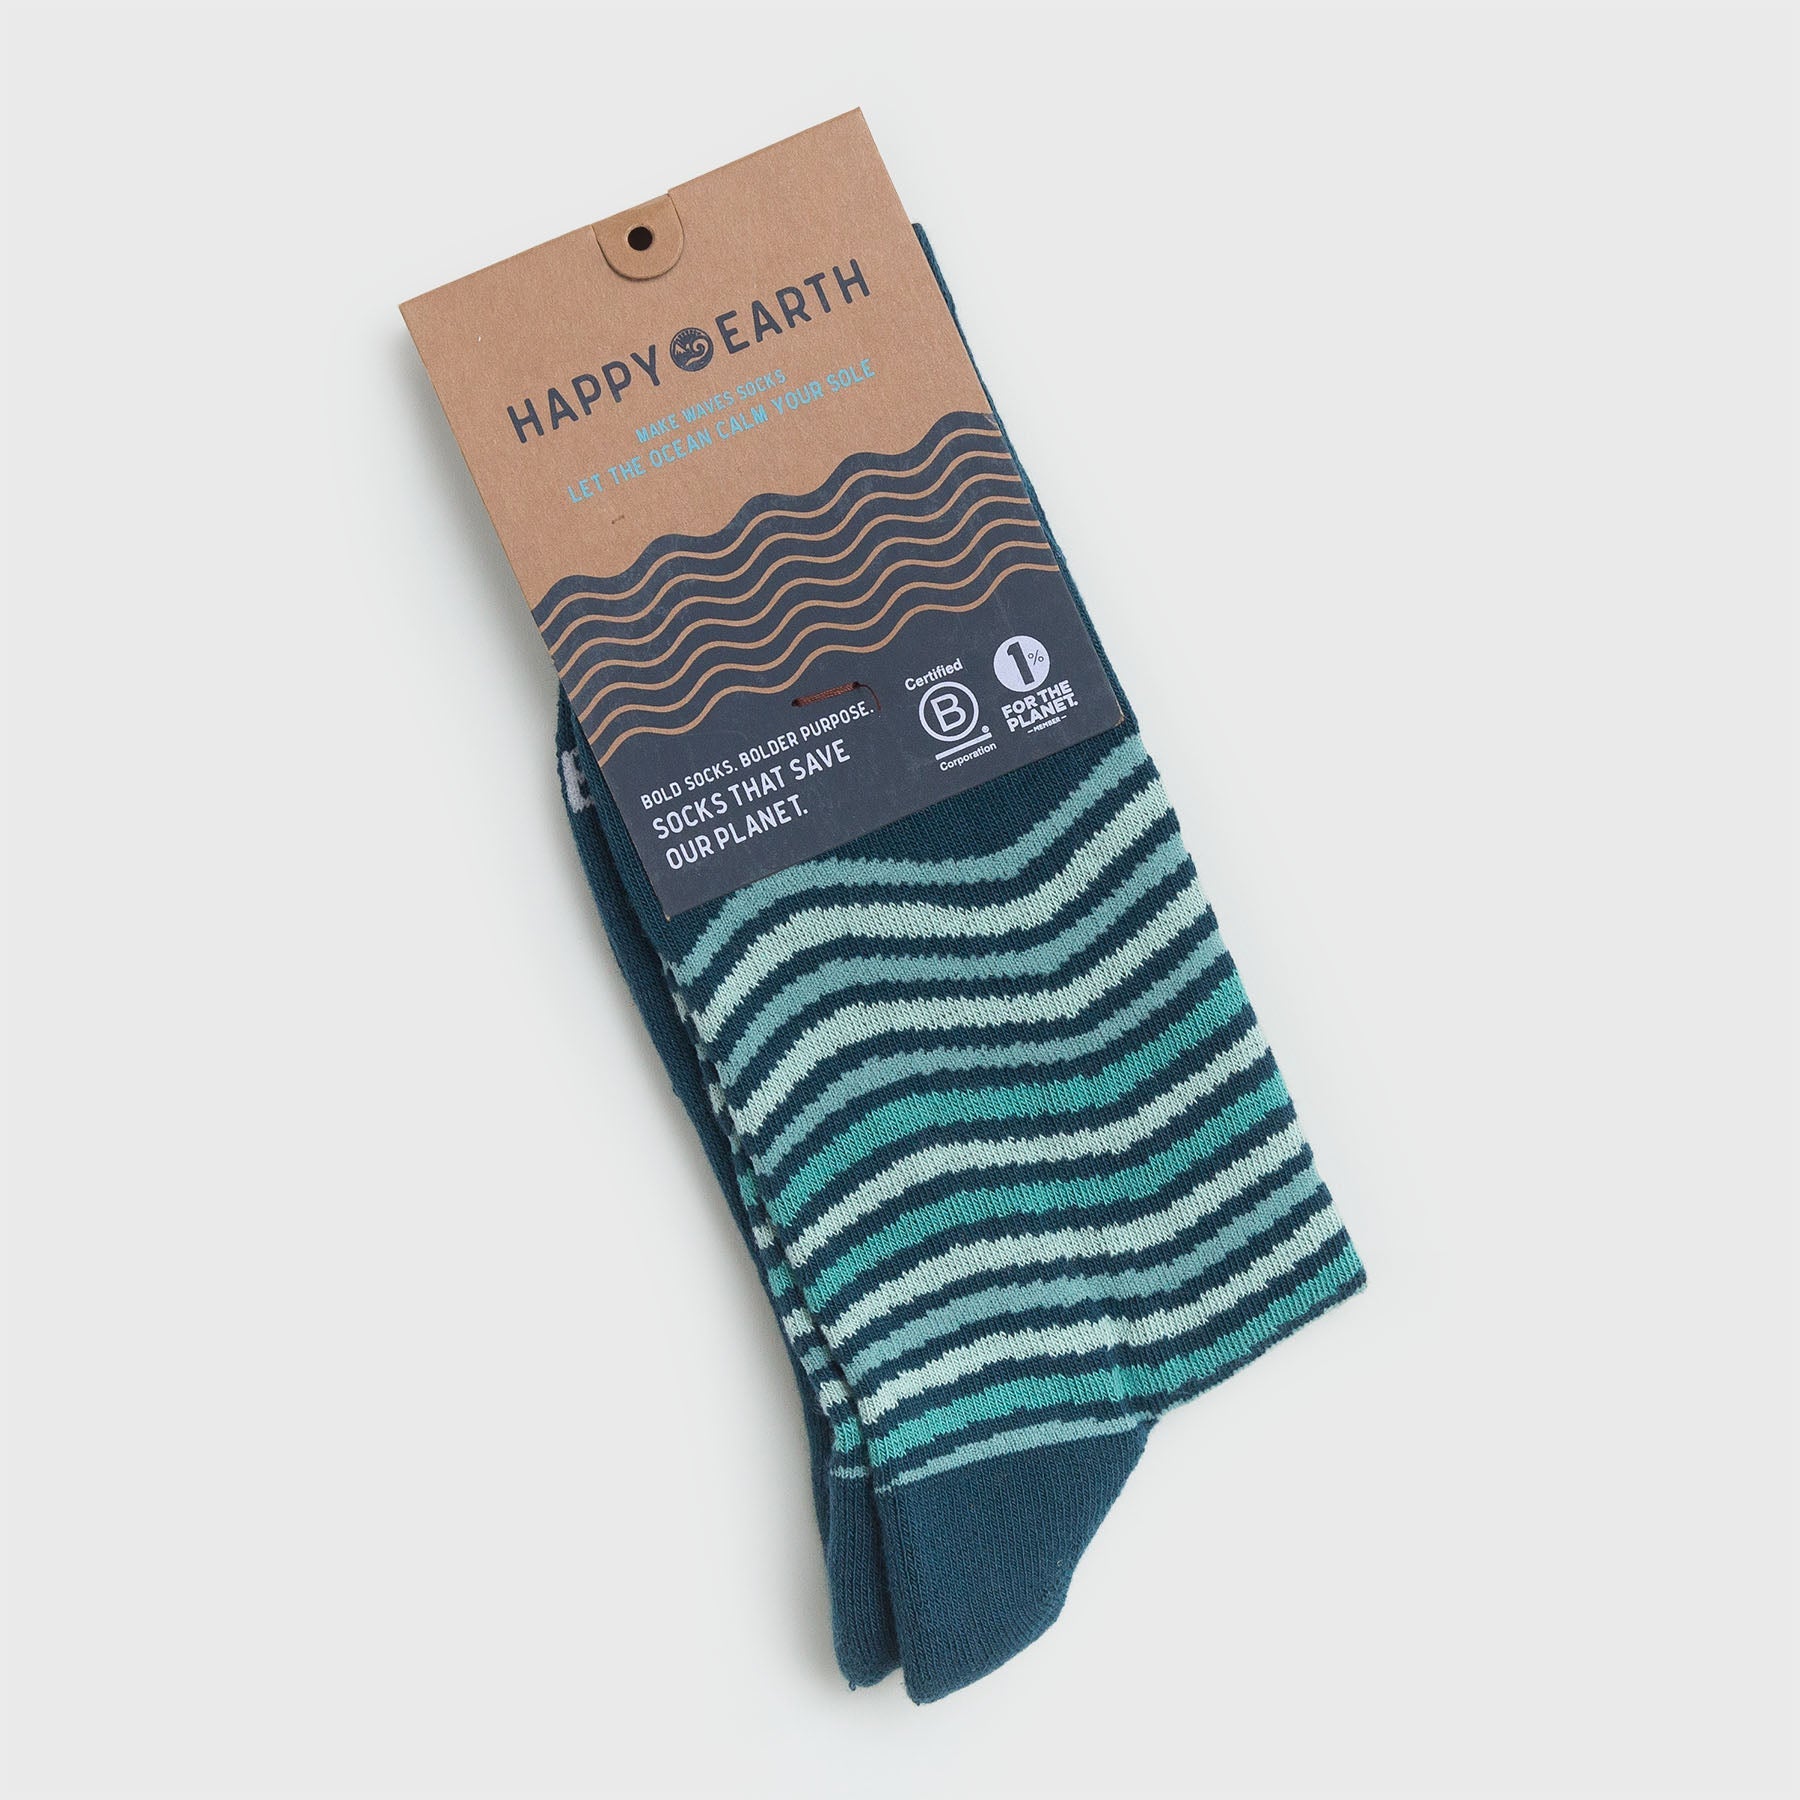 Make Waves Socks by Happy Earth